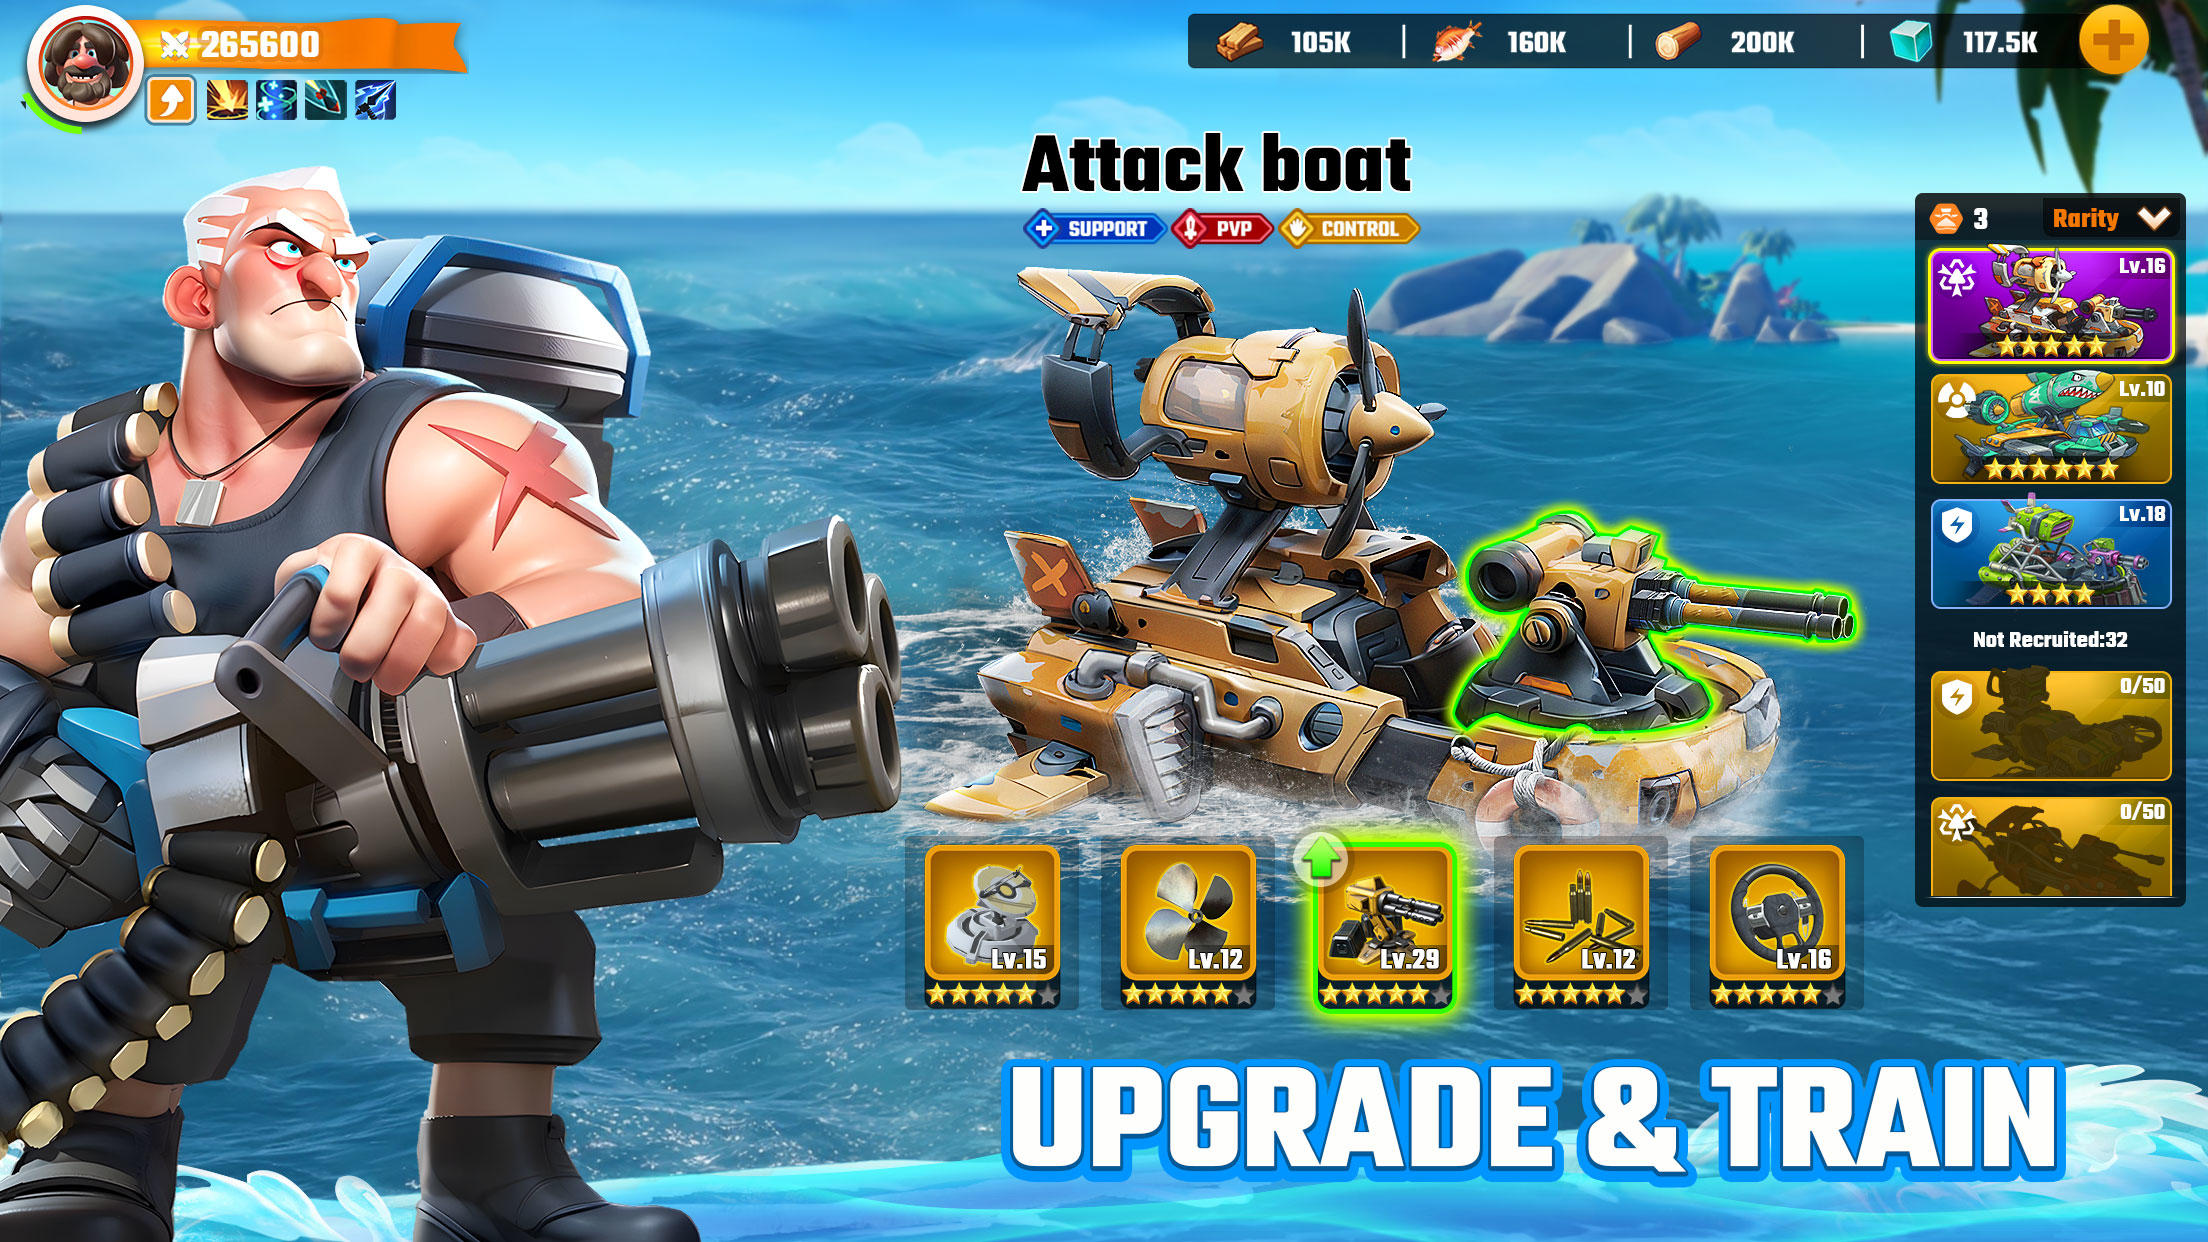 Age of Sea screenshot game